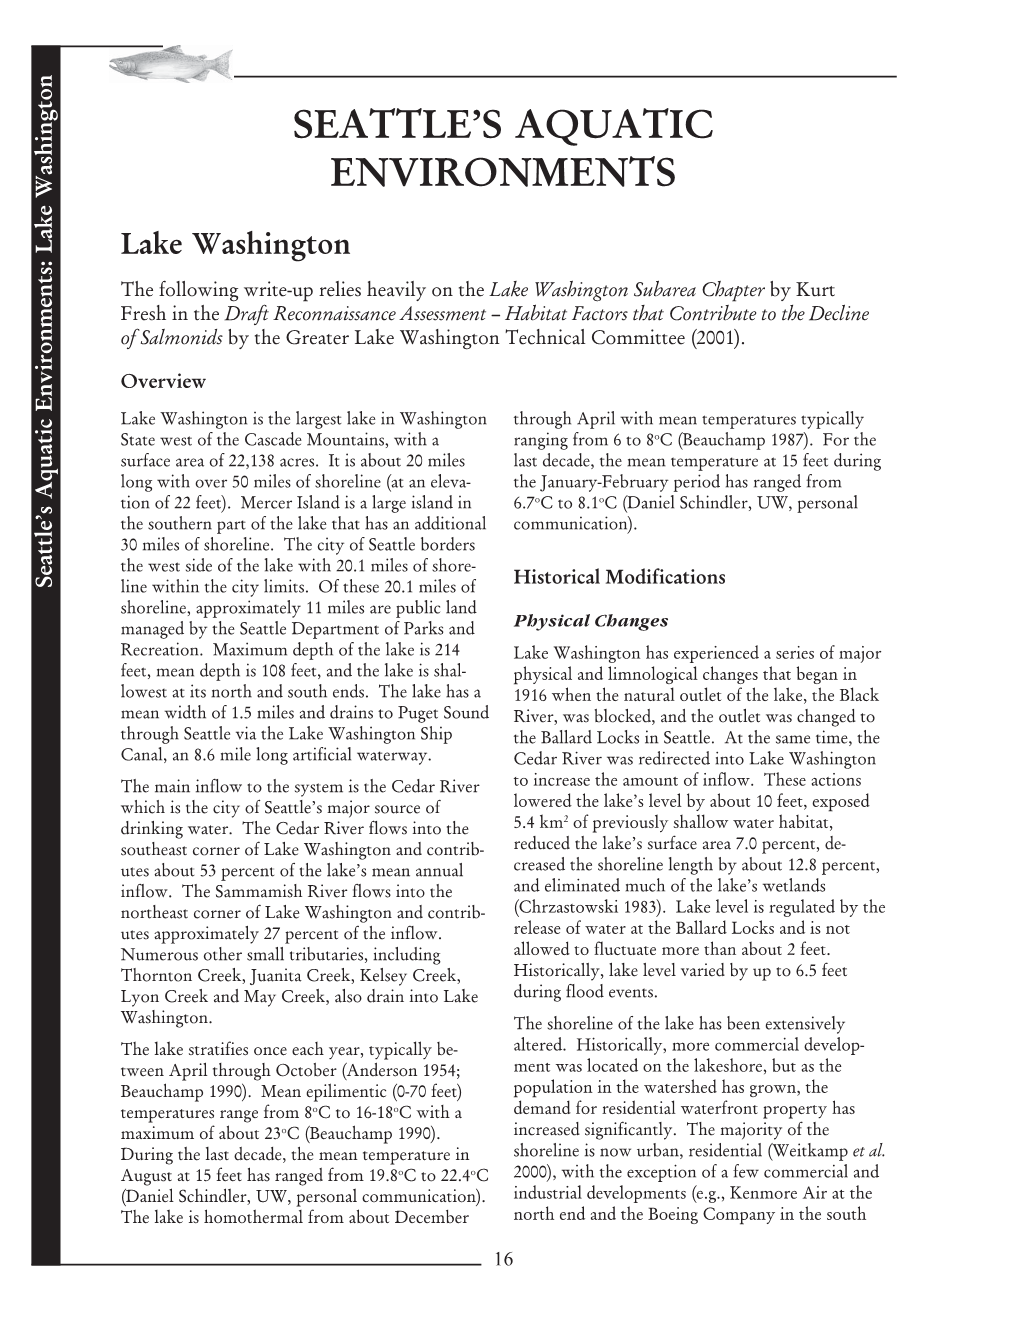 Lake Washington Overview of Salmonids the Lakeishomothermal Fromaboutdecember (Daniel Schindler,UW,Personal Communication)